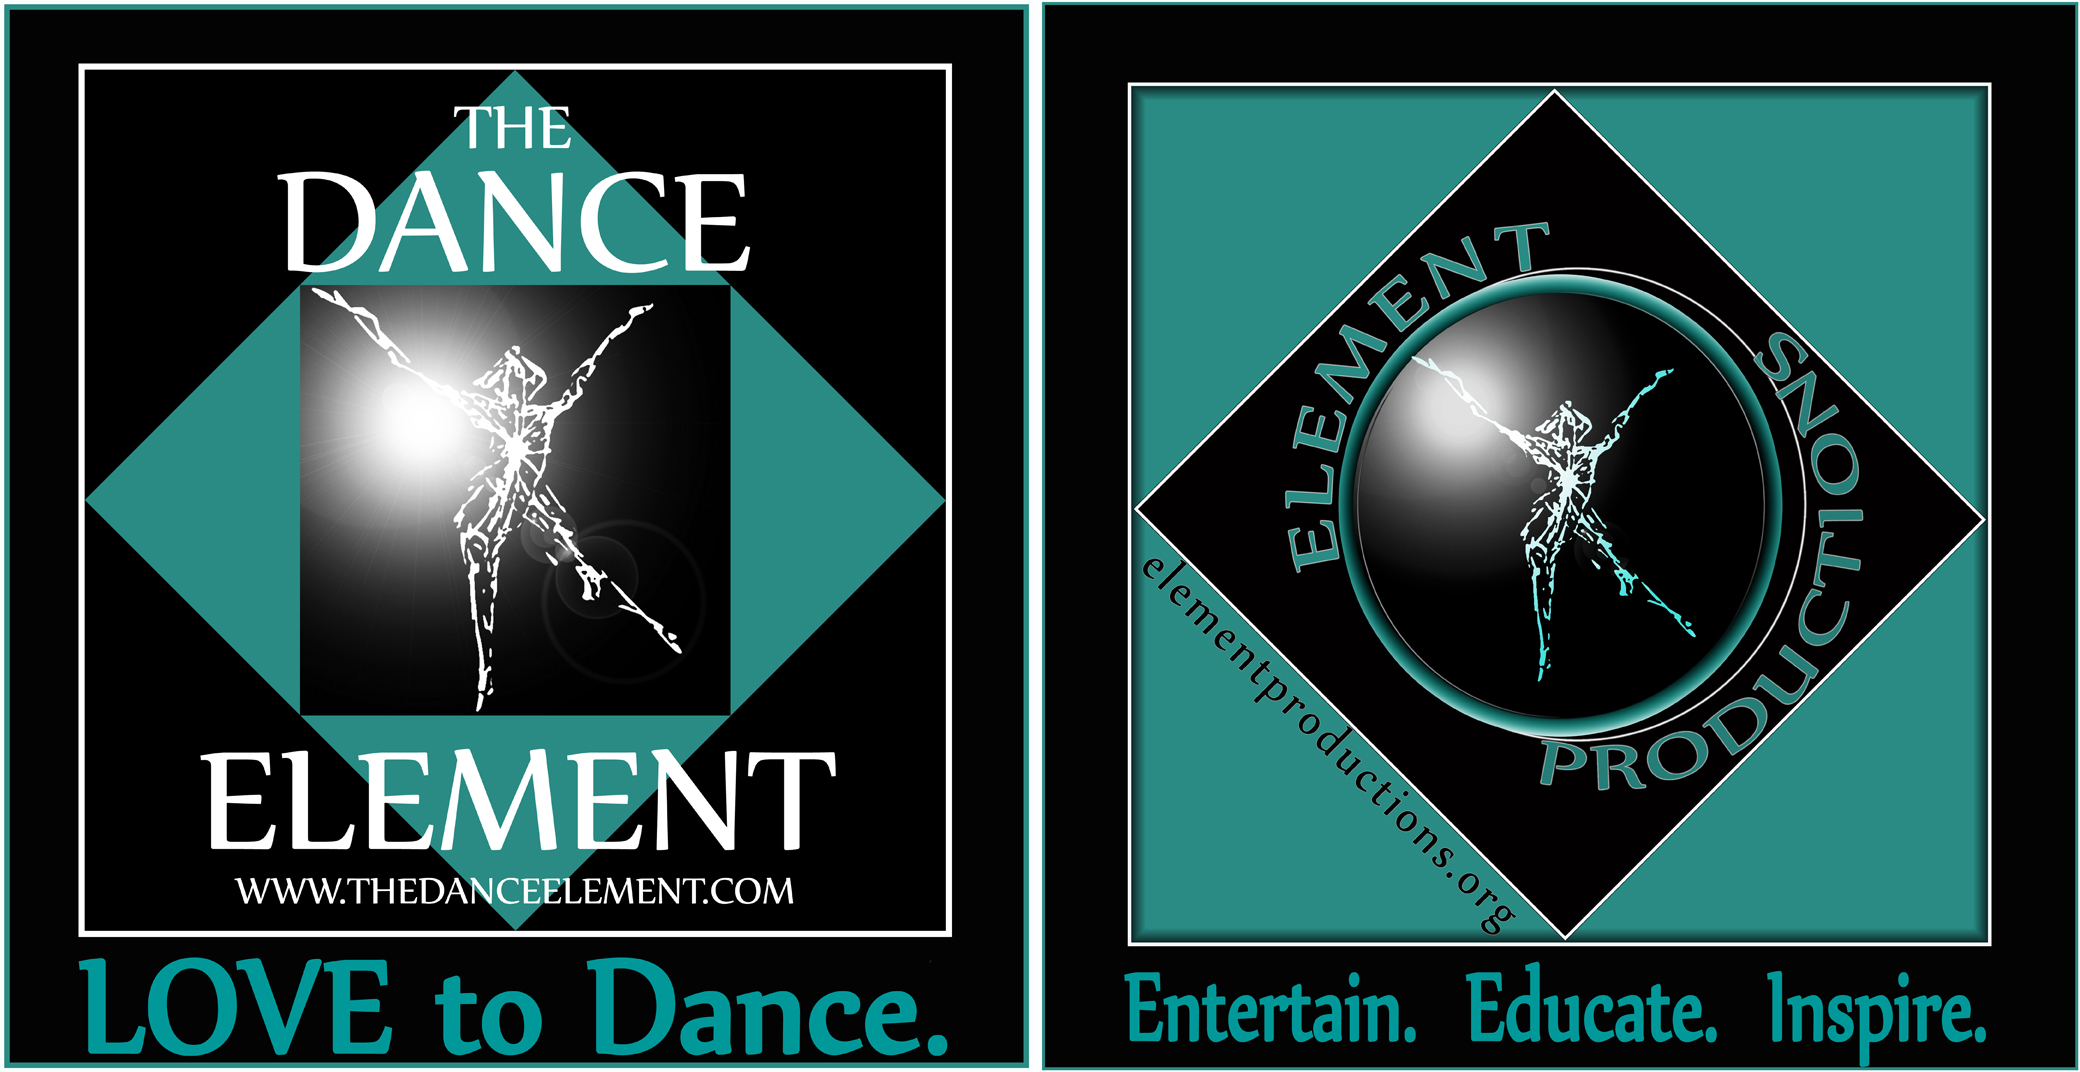 The Dance Element & Element Productions provide dance classes in Wilmington NC